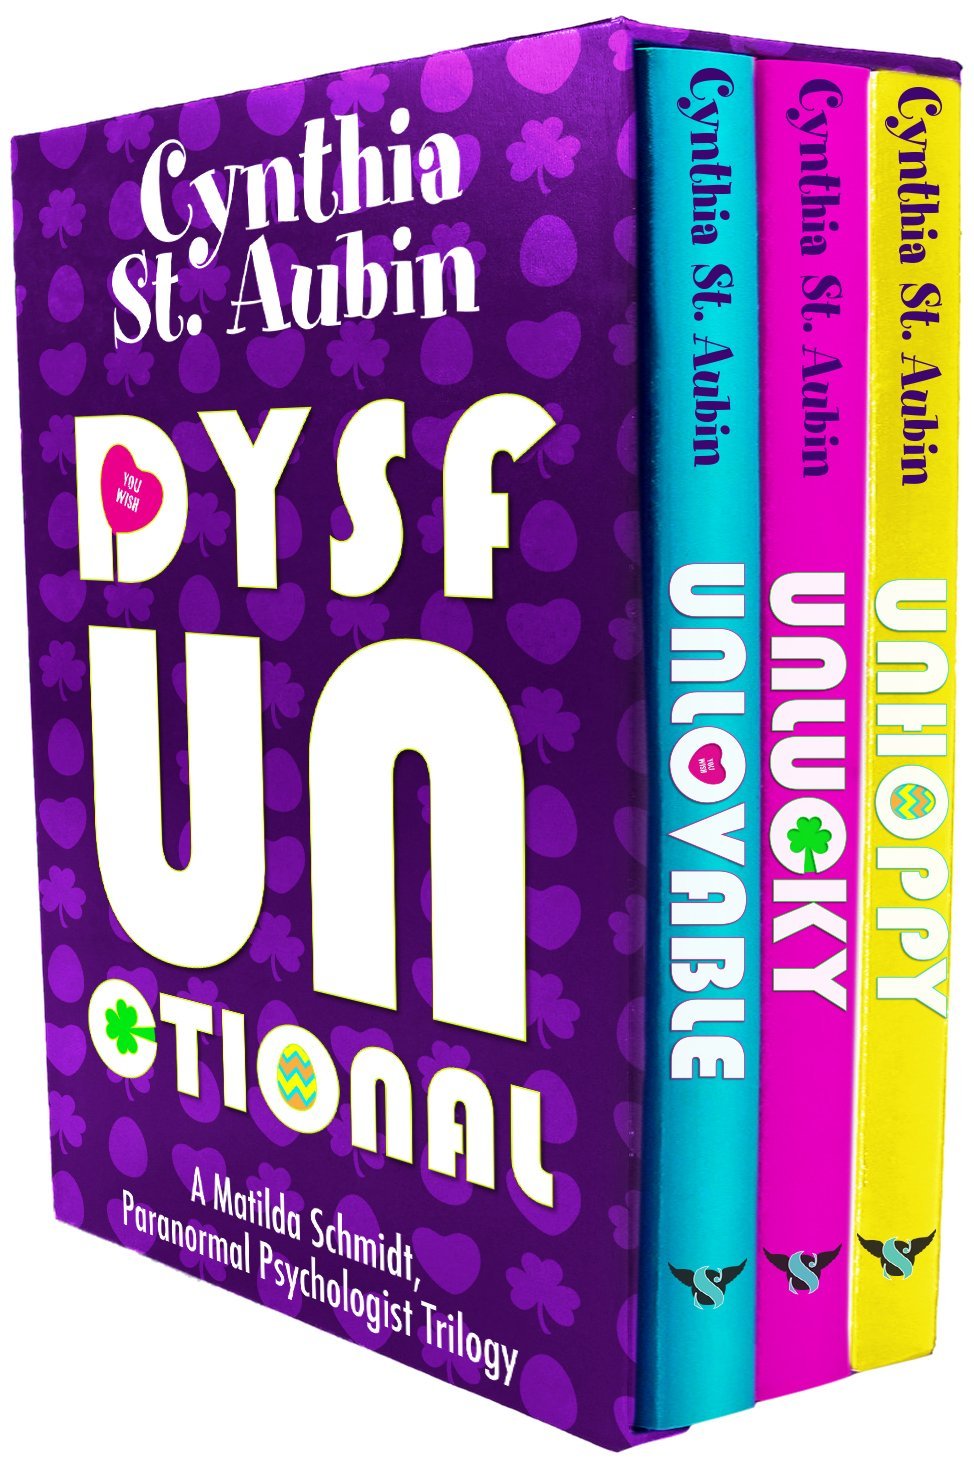 Dystfunctional: A Matilda Schmidt, Paranormal Psychologist Trilogy by Cynthia St. Aubin